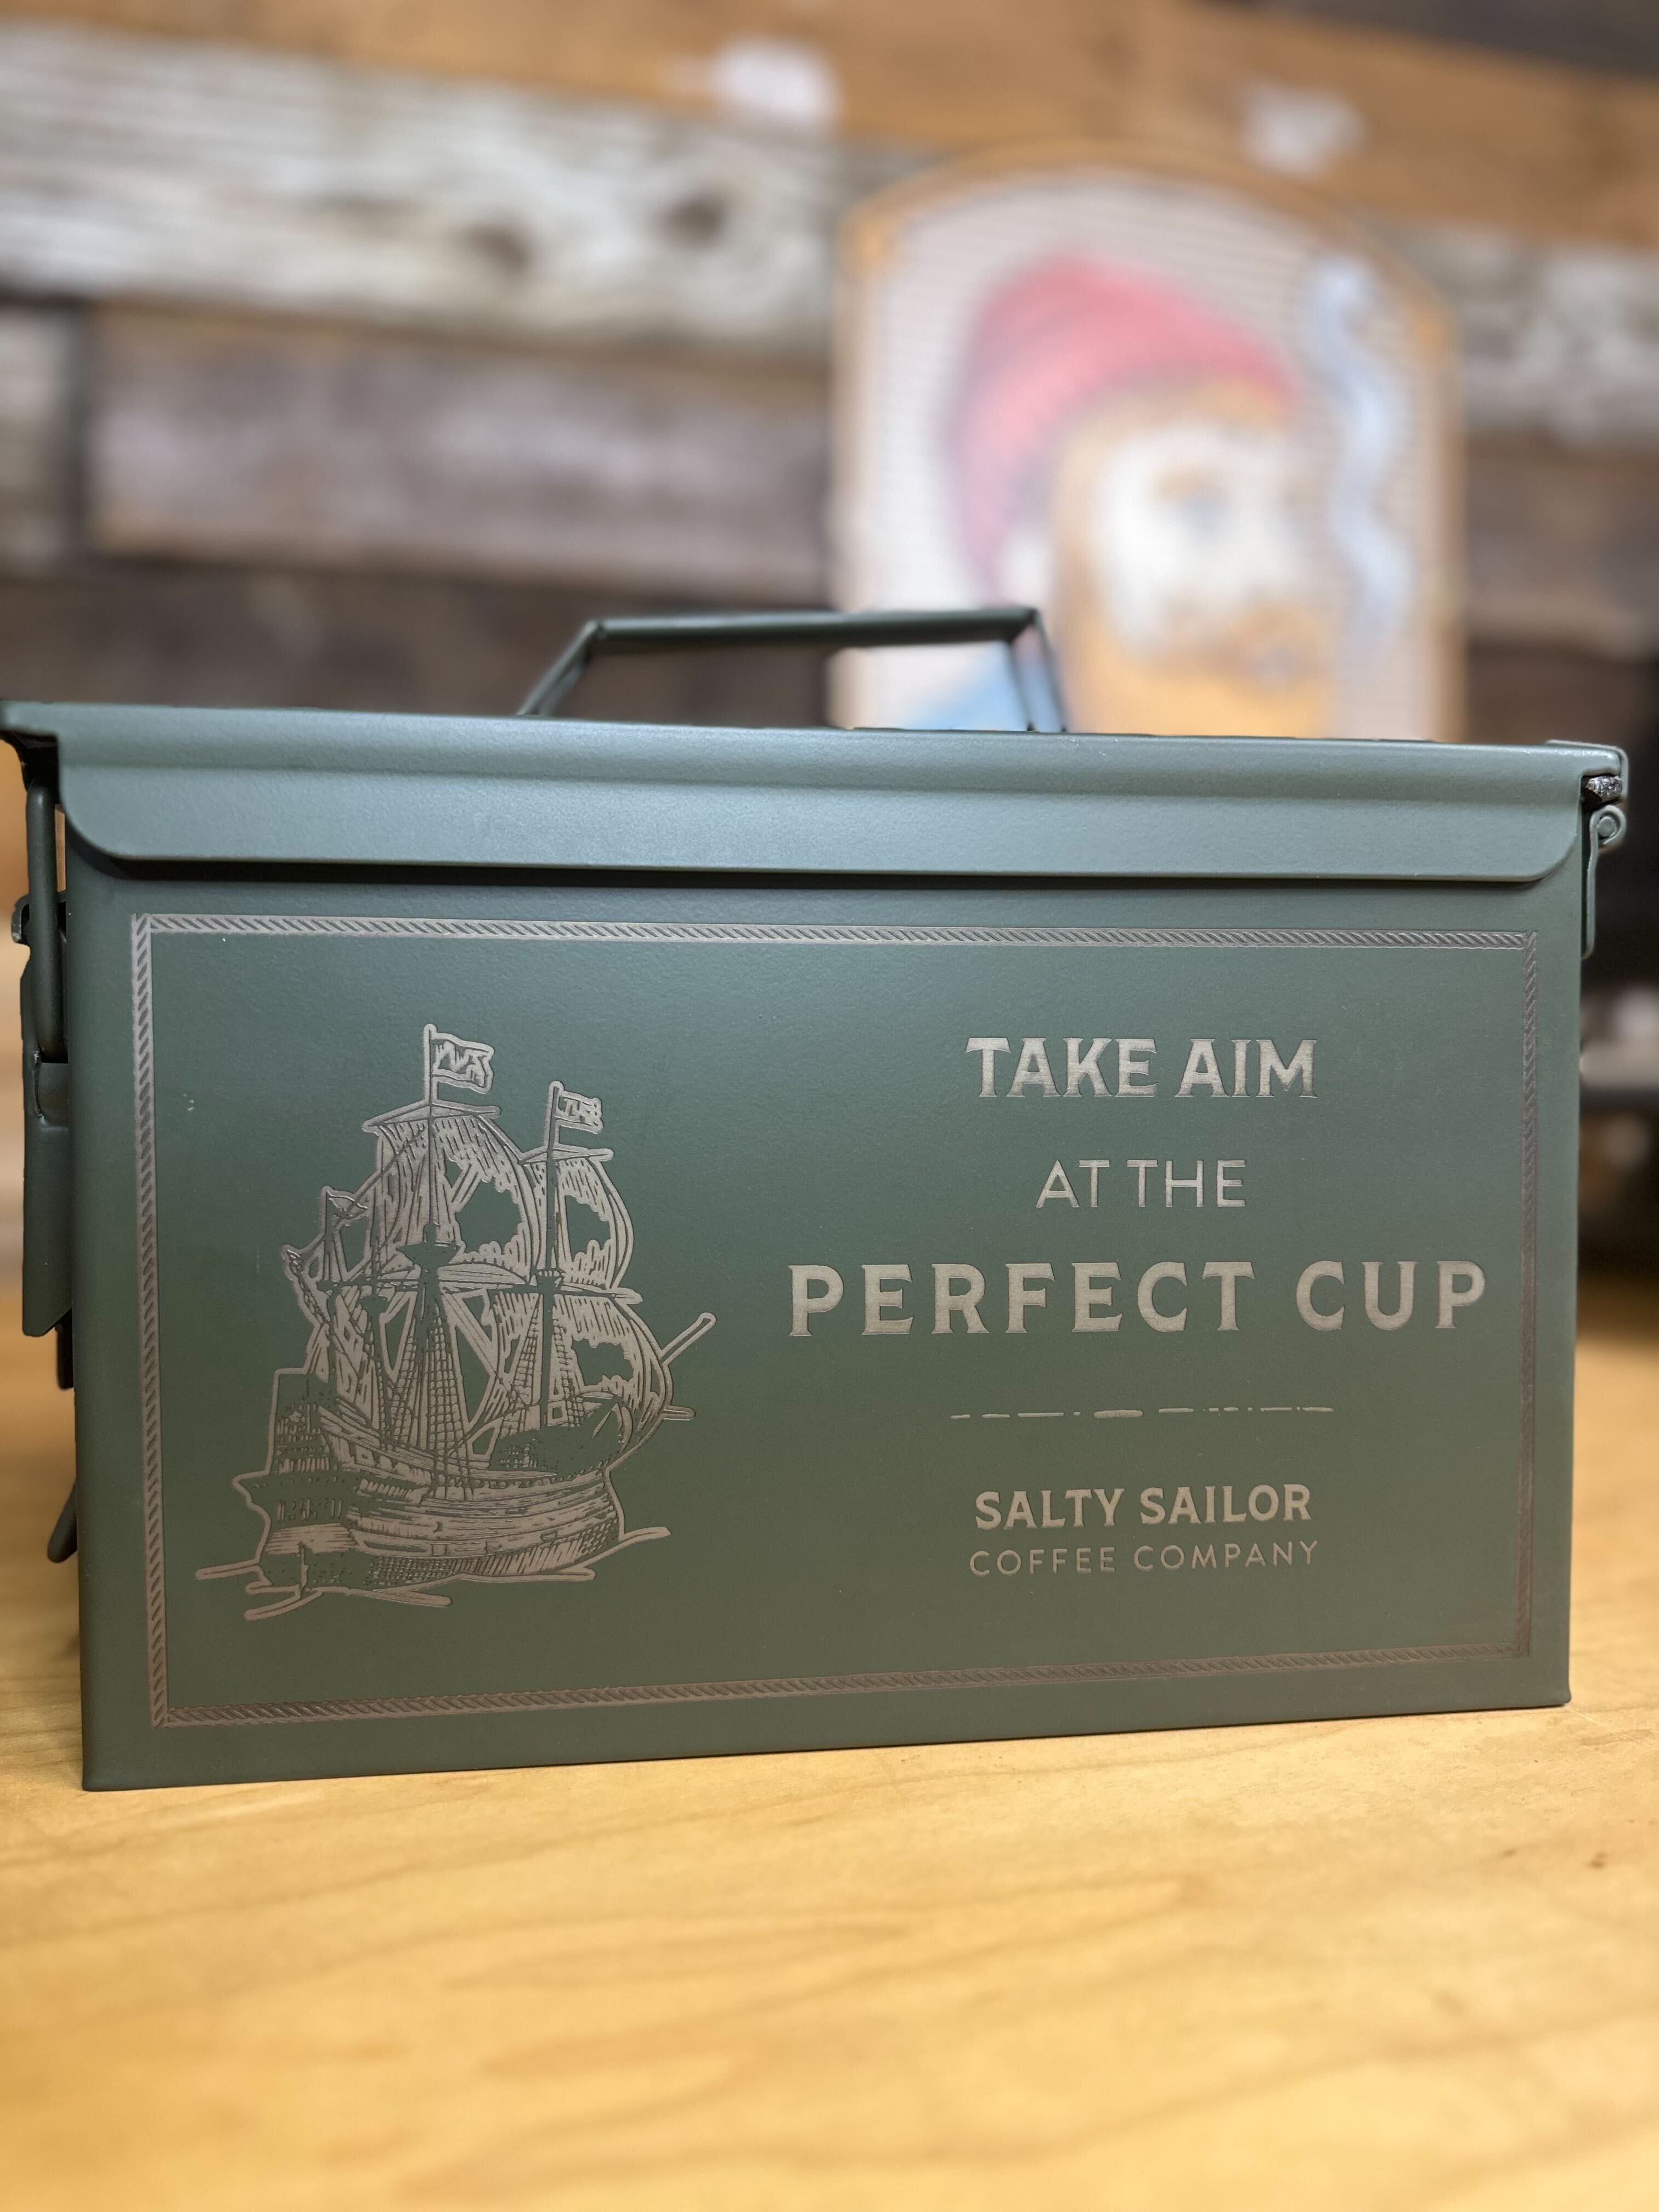 Salty Sailor's Bulletproof Ammo Box Voyage Kit